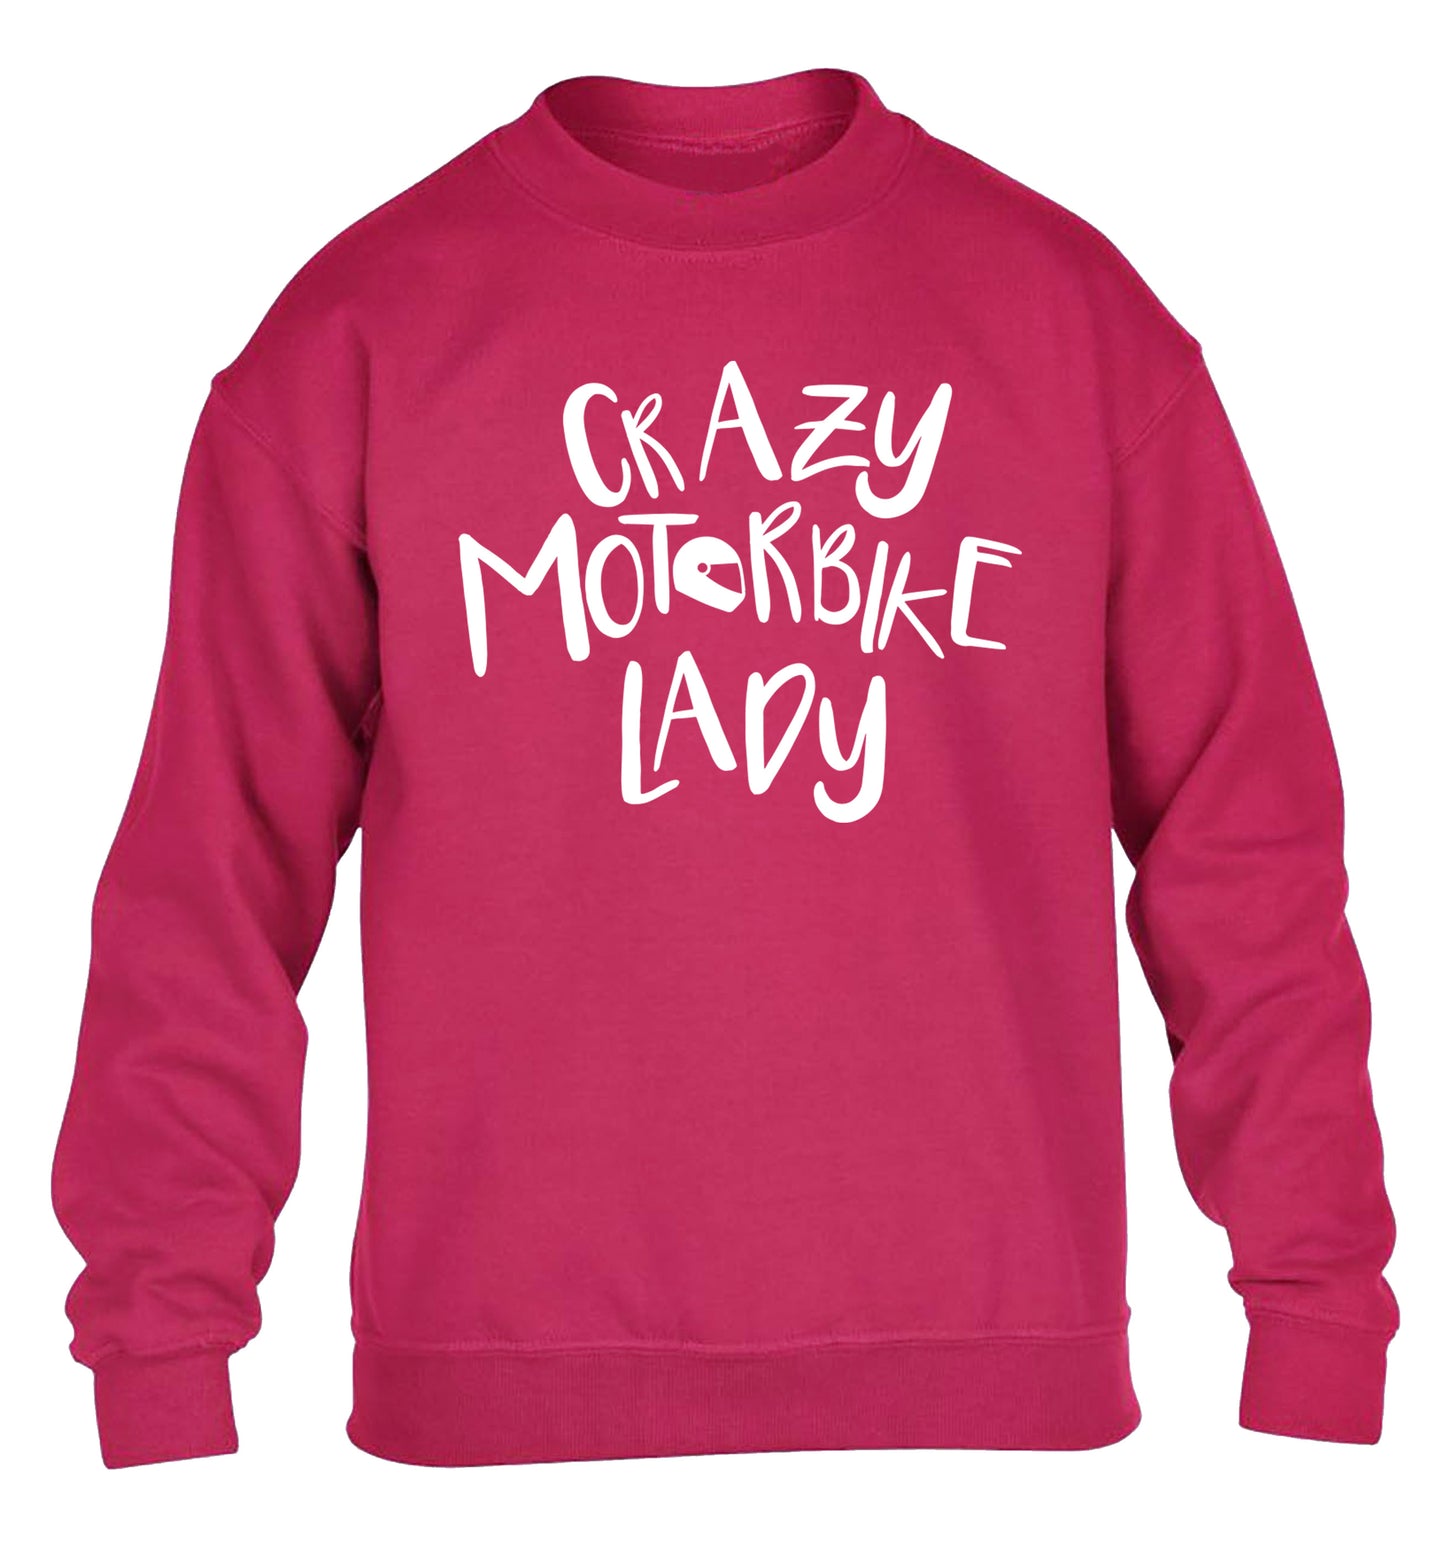 Crazy motorbike lady children's pink sweater 12-13 Years